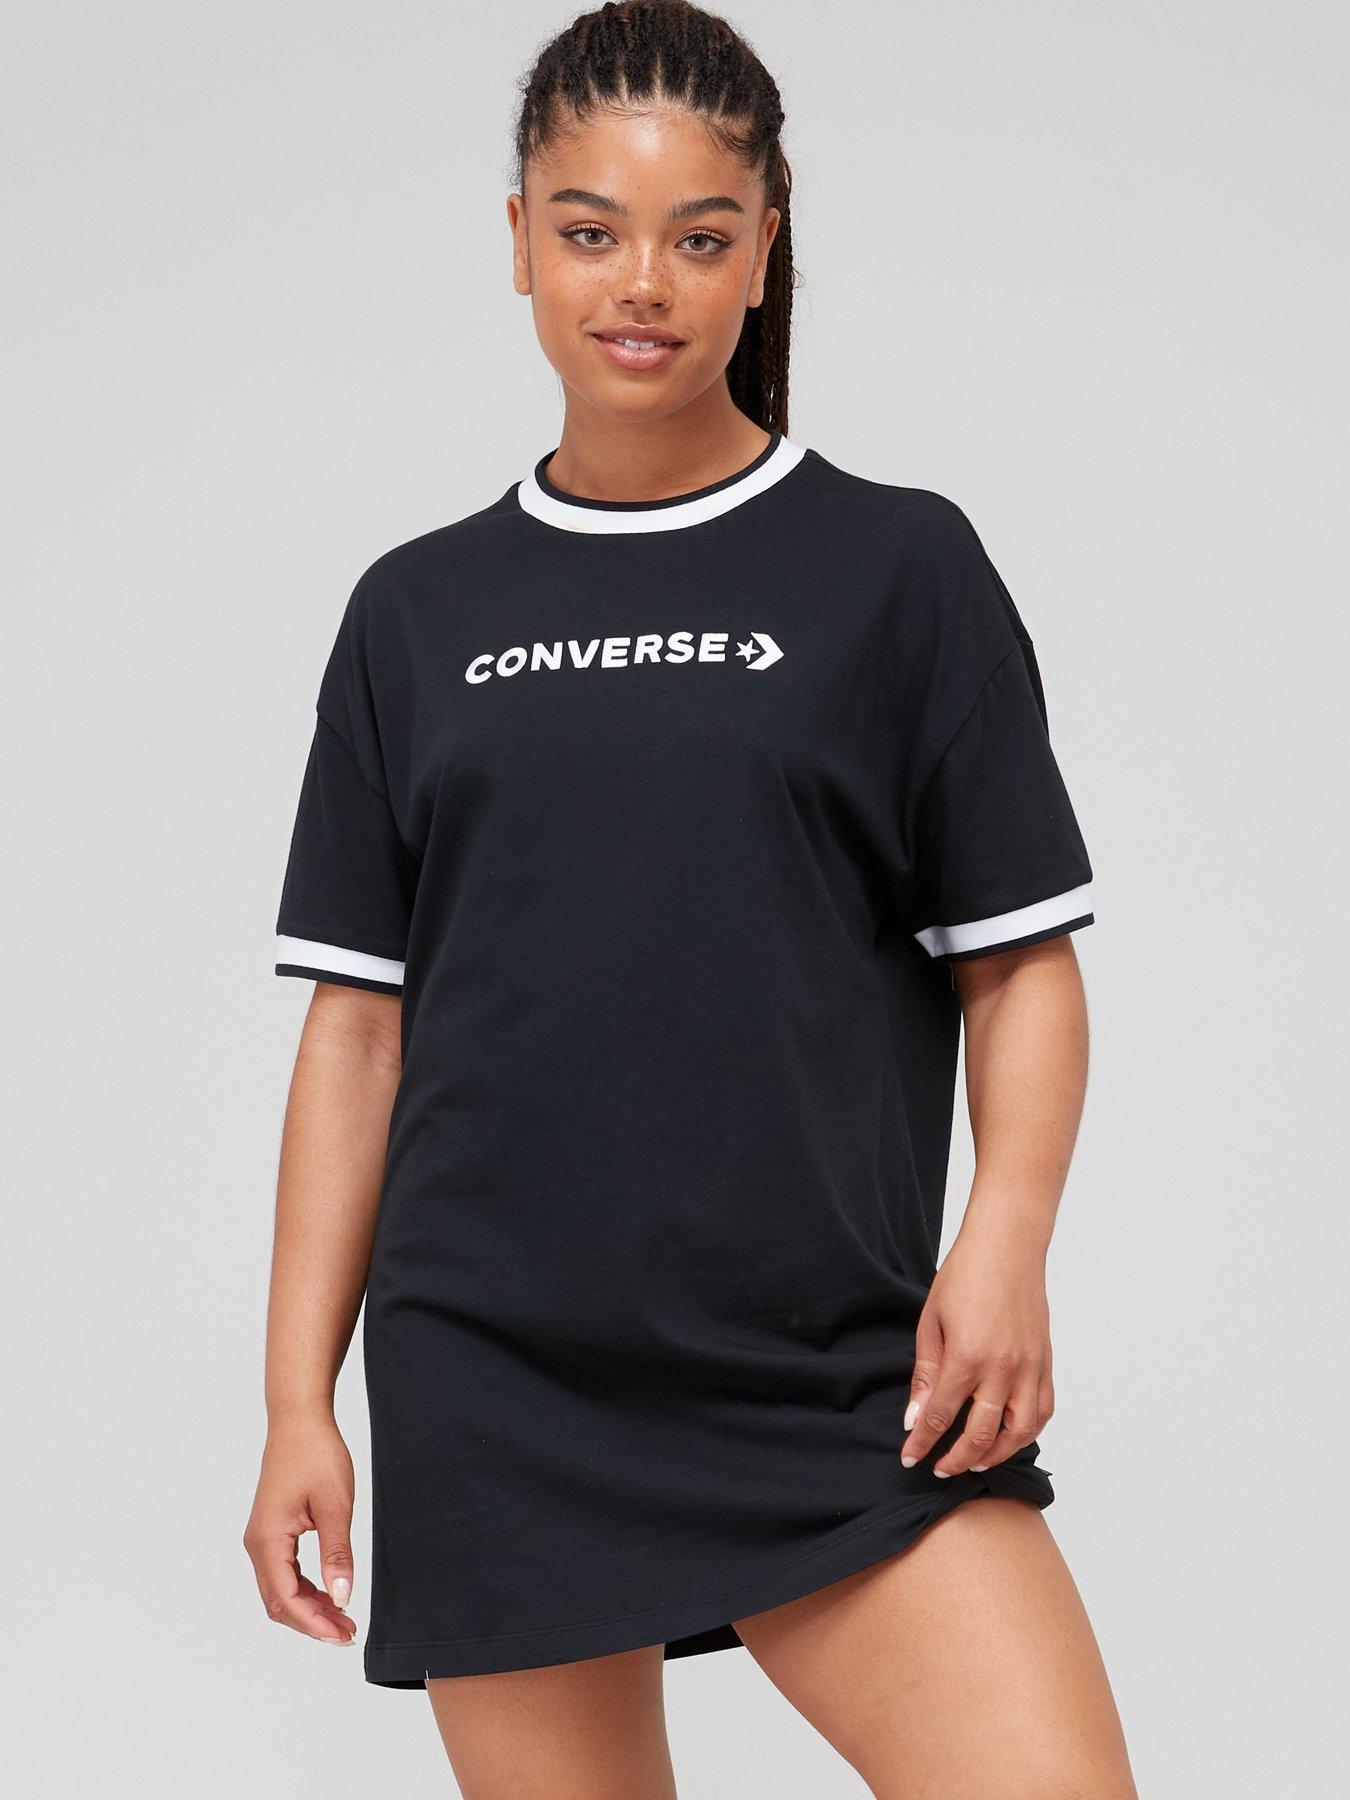 Converse Wordmark T-Shirt Dress - Black